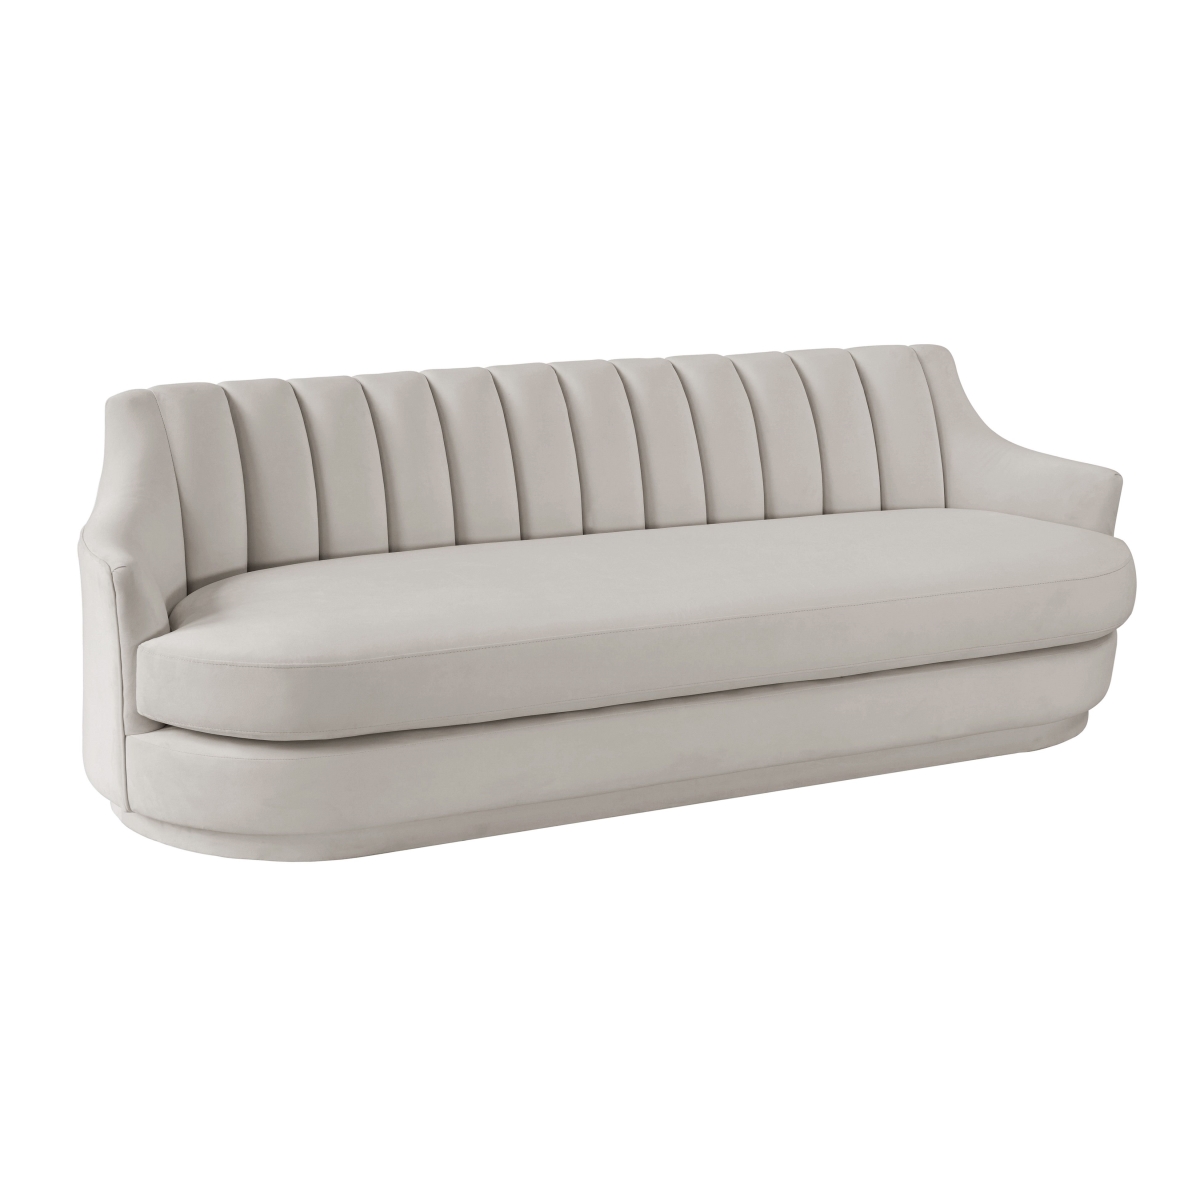 TOV-L68131 Peyton Velvet Sofa, Light Grey -  Tov Furniture